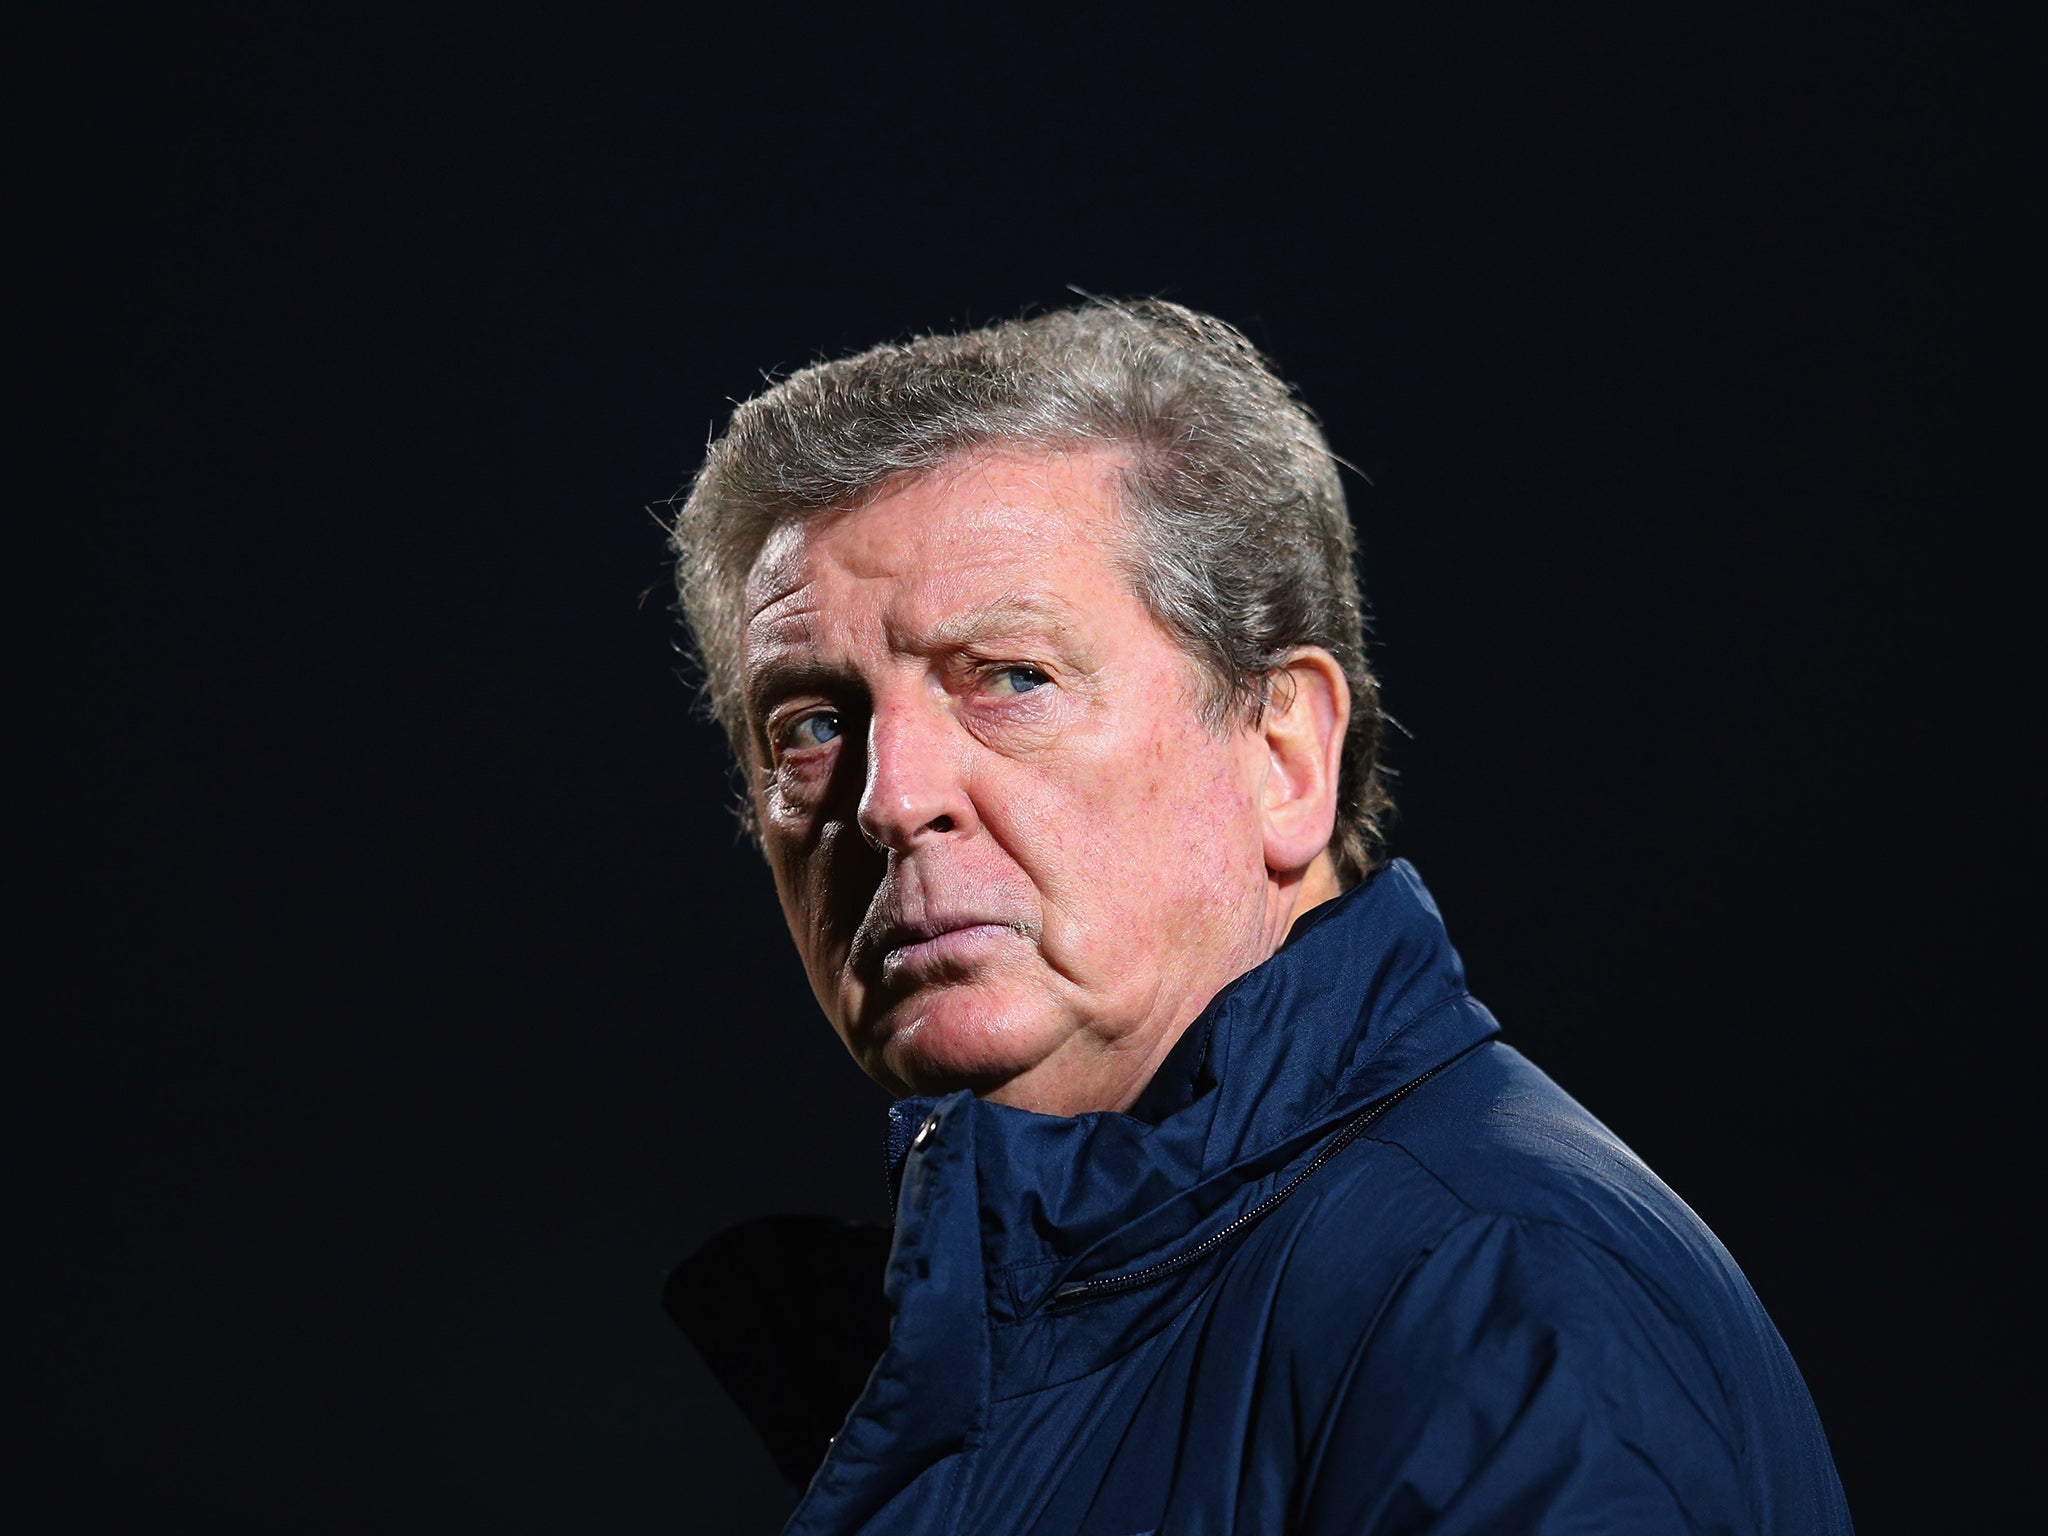 England manager Roy Hodgson looks on in Vilnius